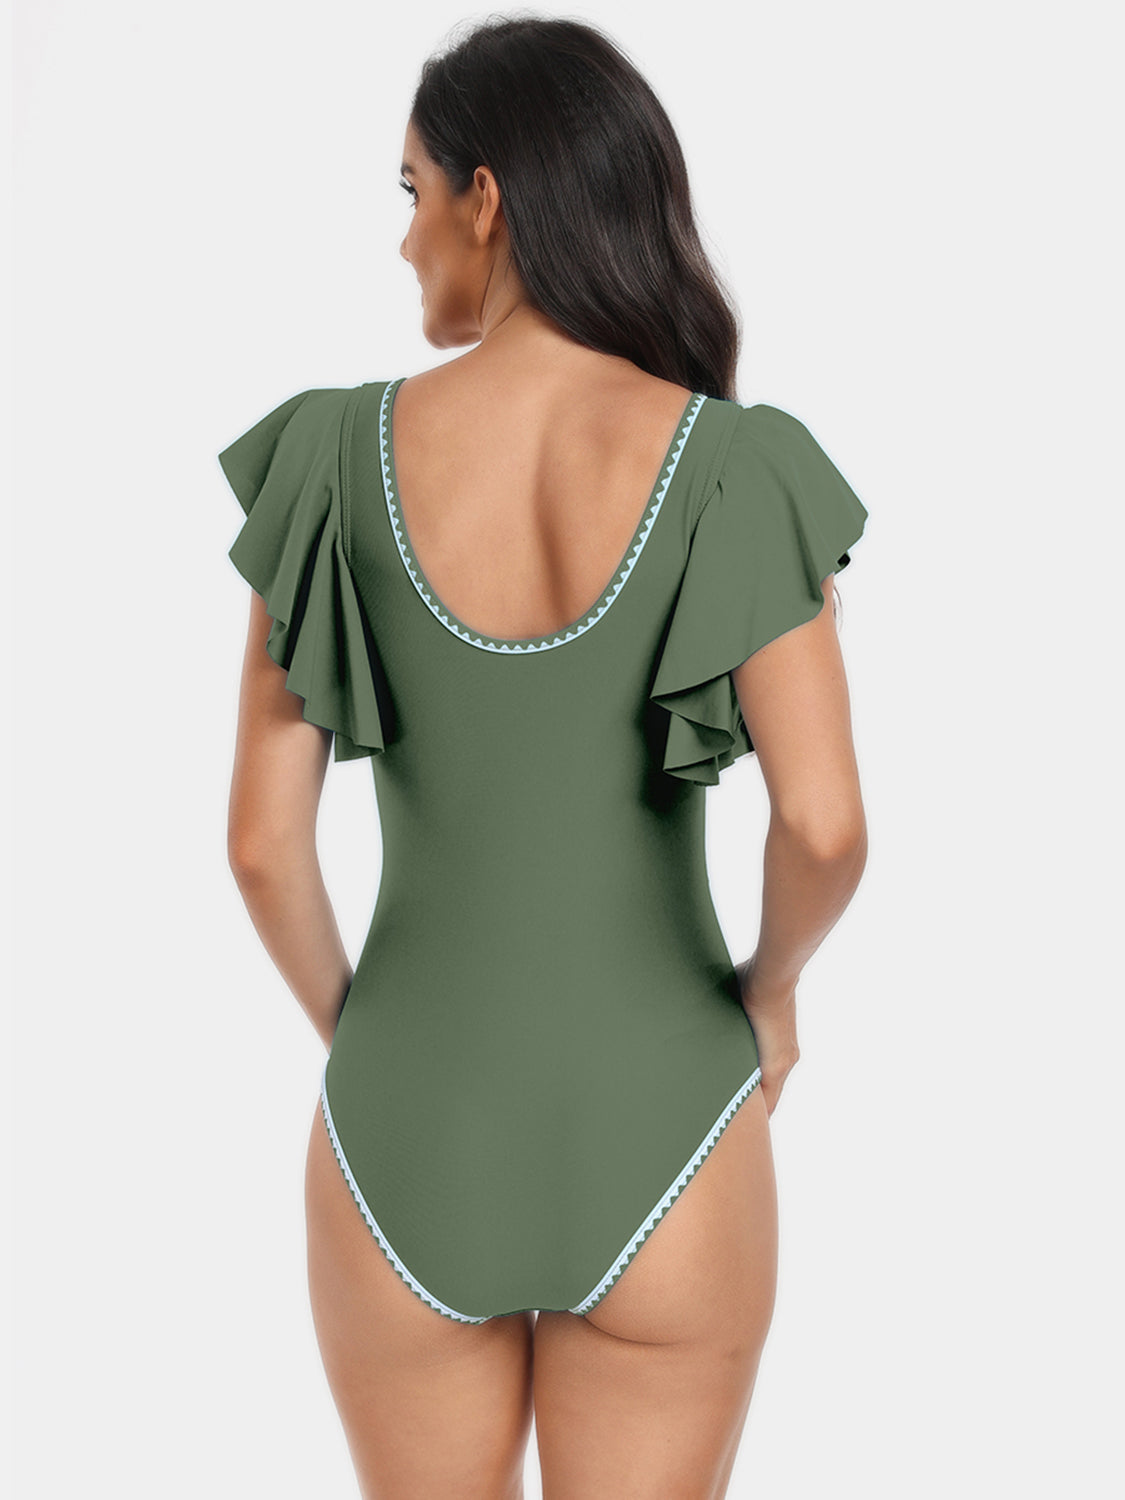 Plunge Cap Sleeve One-Piece Swimwear - Women’s Clothing & Accessories - Swimwear - 6 - 2024